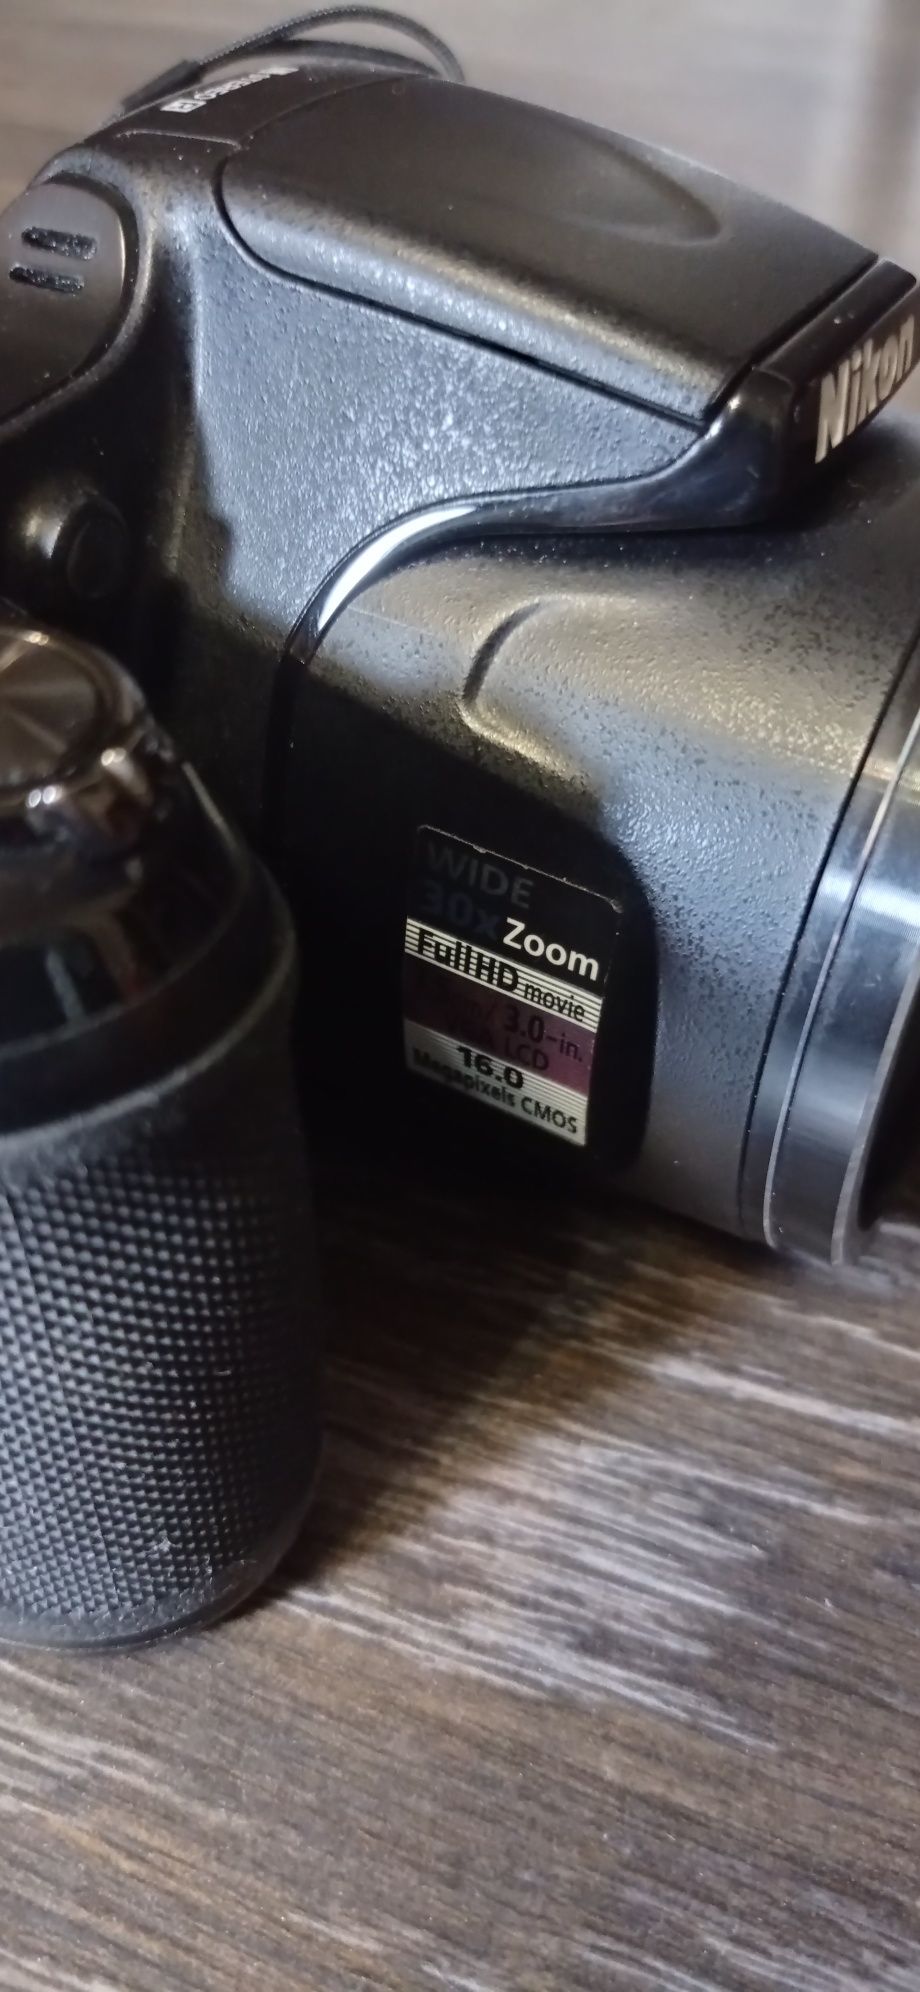 Фотоаппарат Nikon coolpix L820